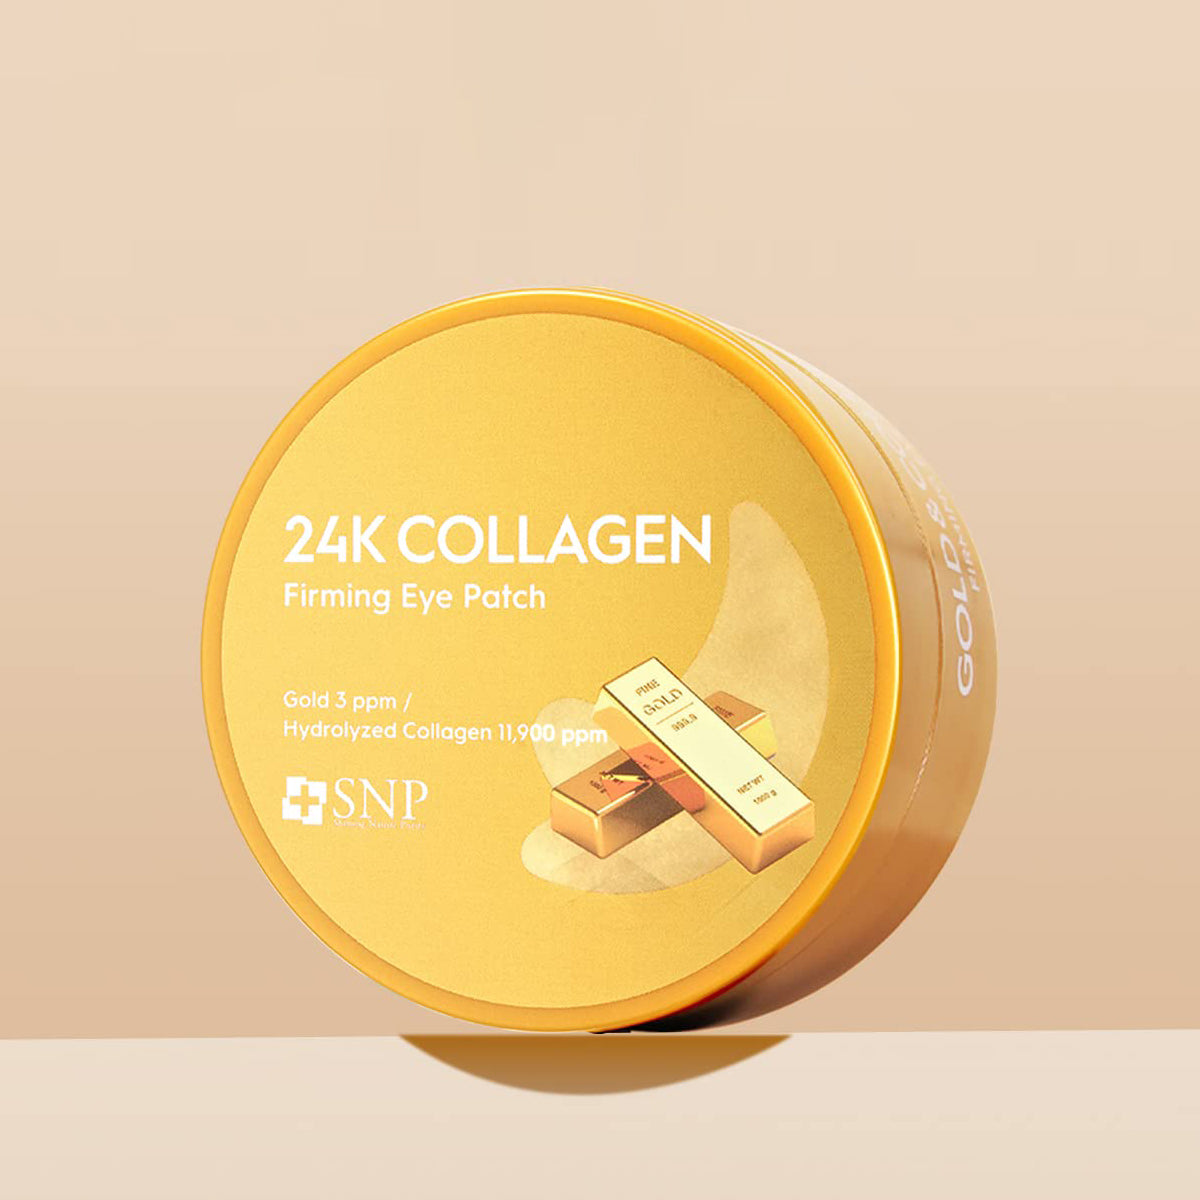 Gold & Collagen Firming Eye Patch